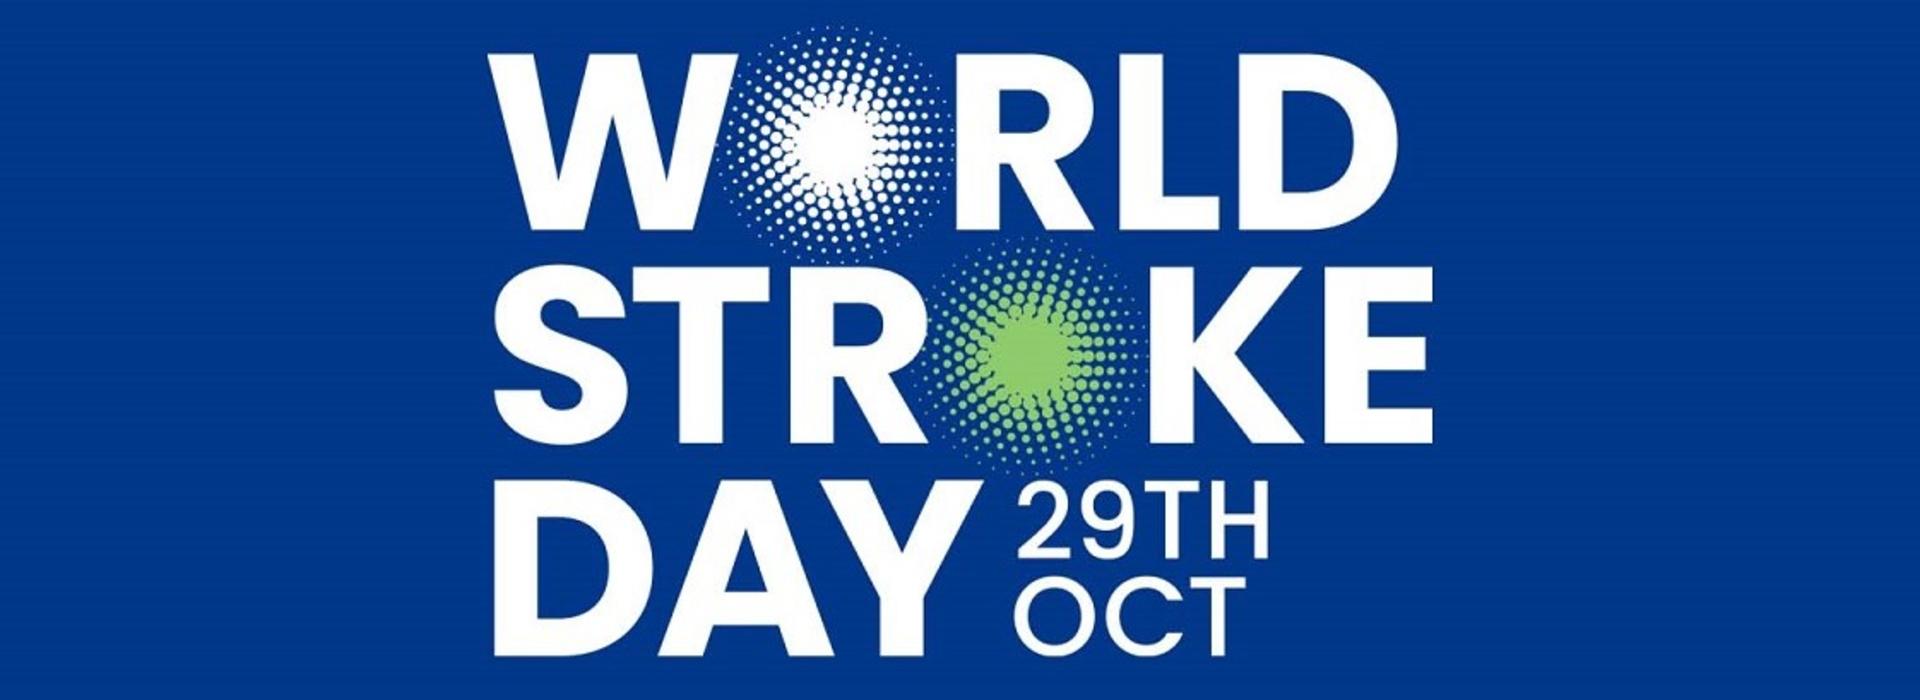 World Stroke Day Banner